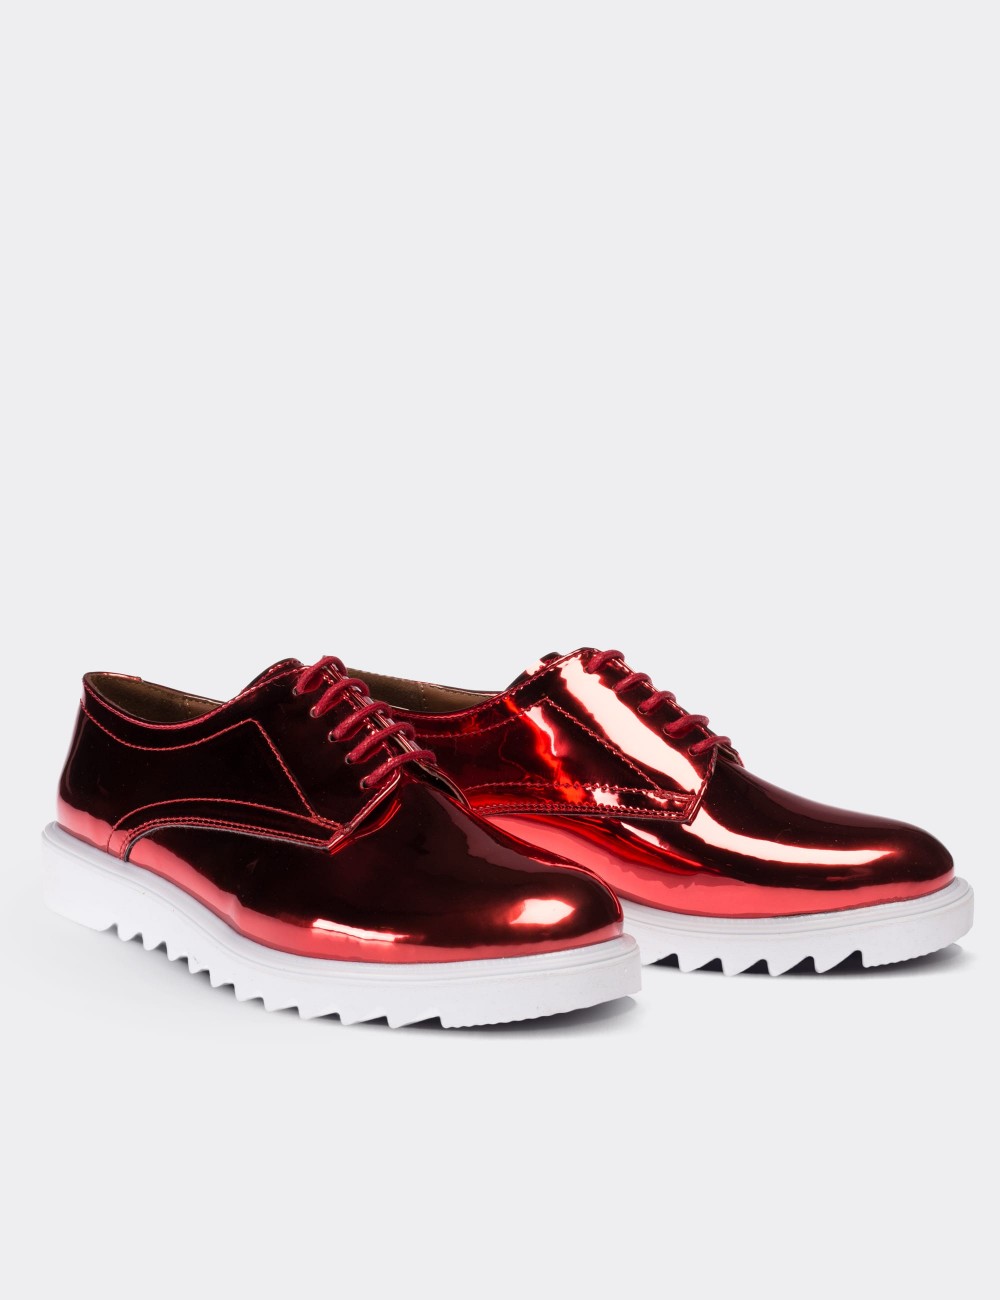 Red Patent Leather Lace-up Shoes - 01430ZKRMP04